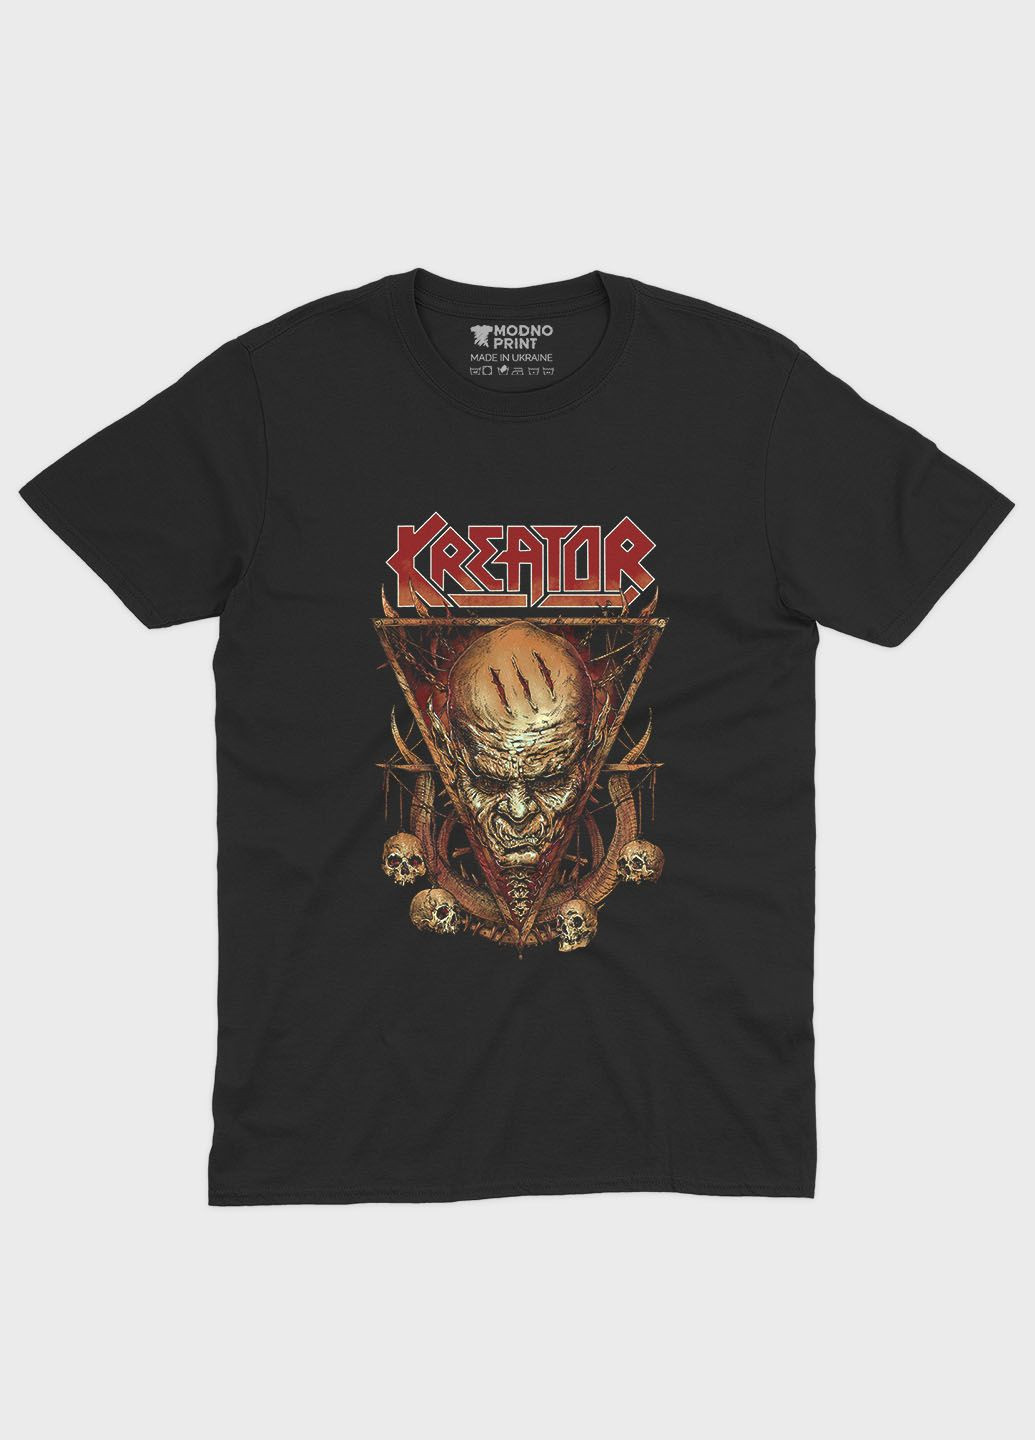 Черная мужская футболка с рок-принтом "kreator" (ts001-2-bl-004-2-171) Modno